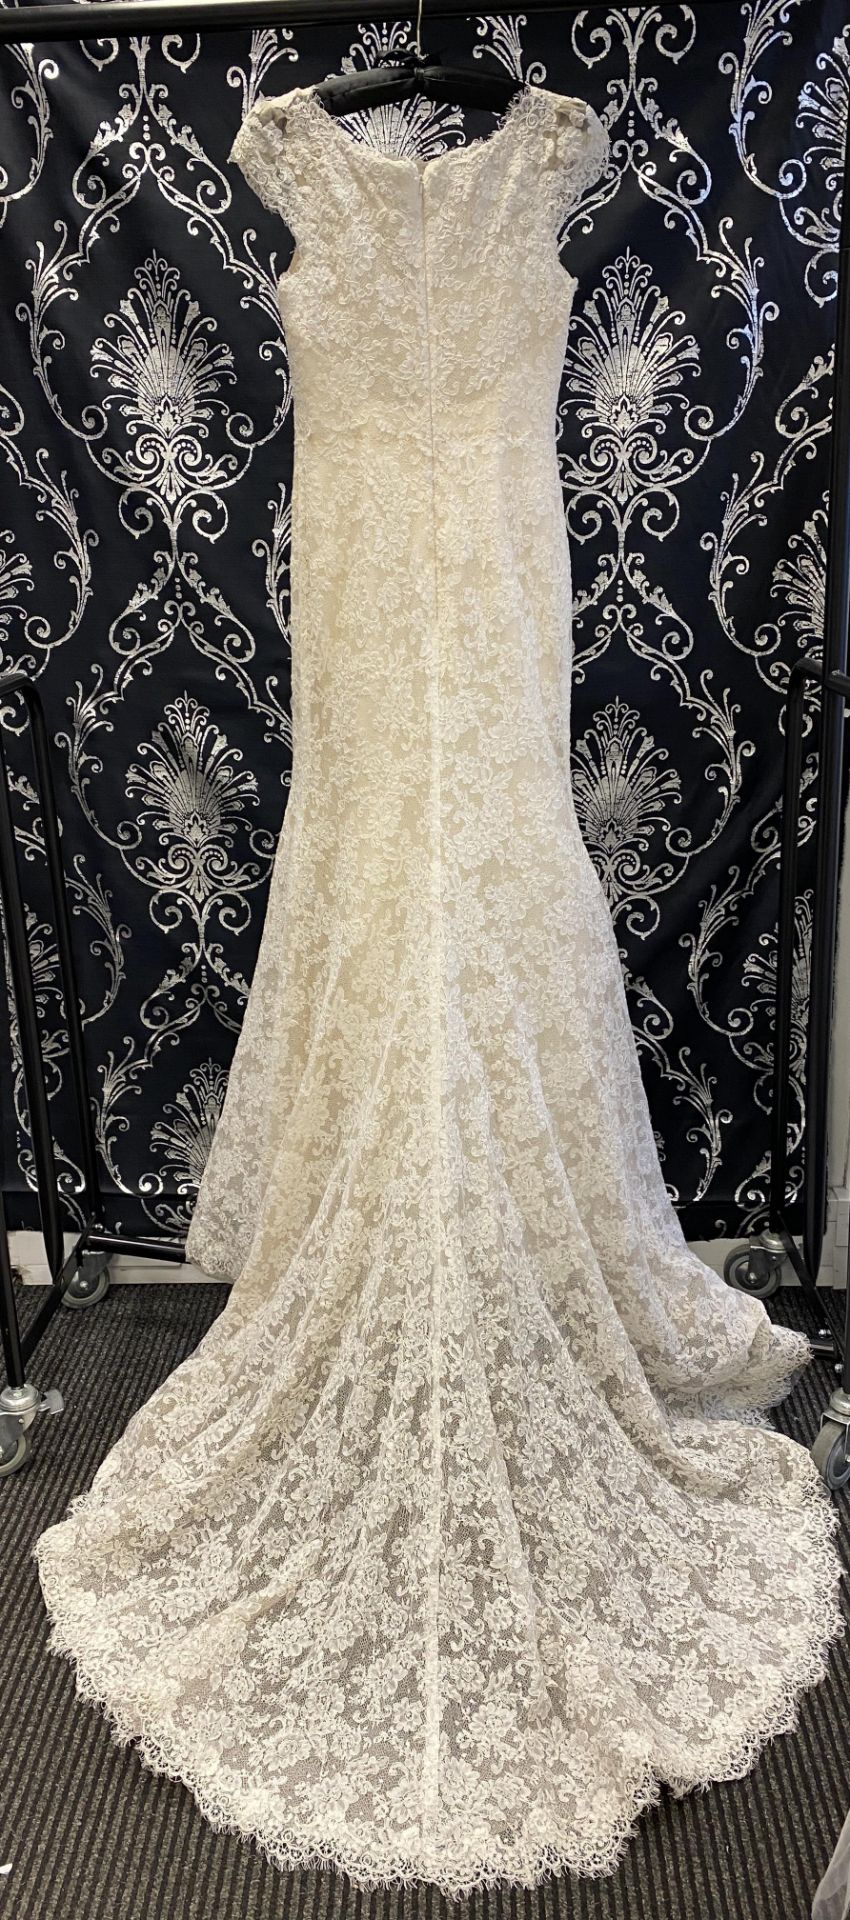 1 x ANNA SUL Y 'White Rose' Full Lace Mermaid Style Designer Wedding Dress RRP £1,250 - Image 2 of 11